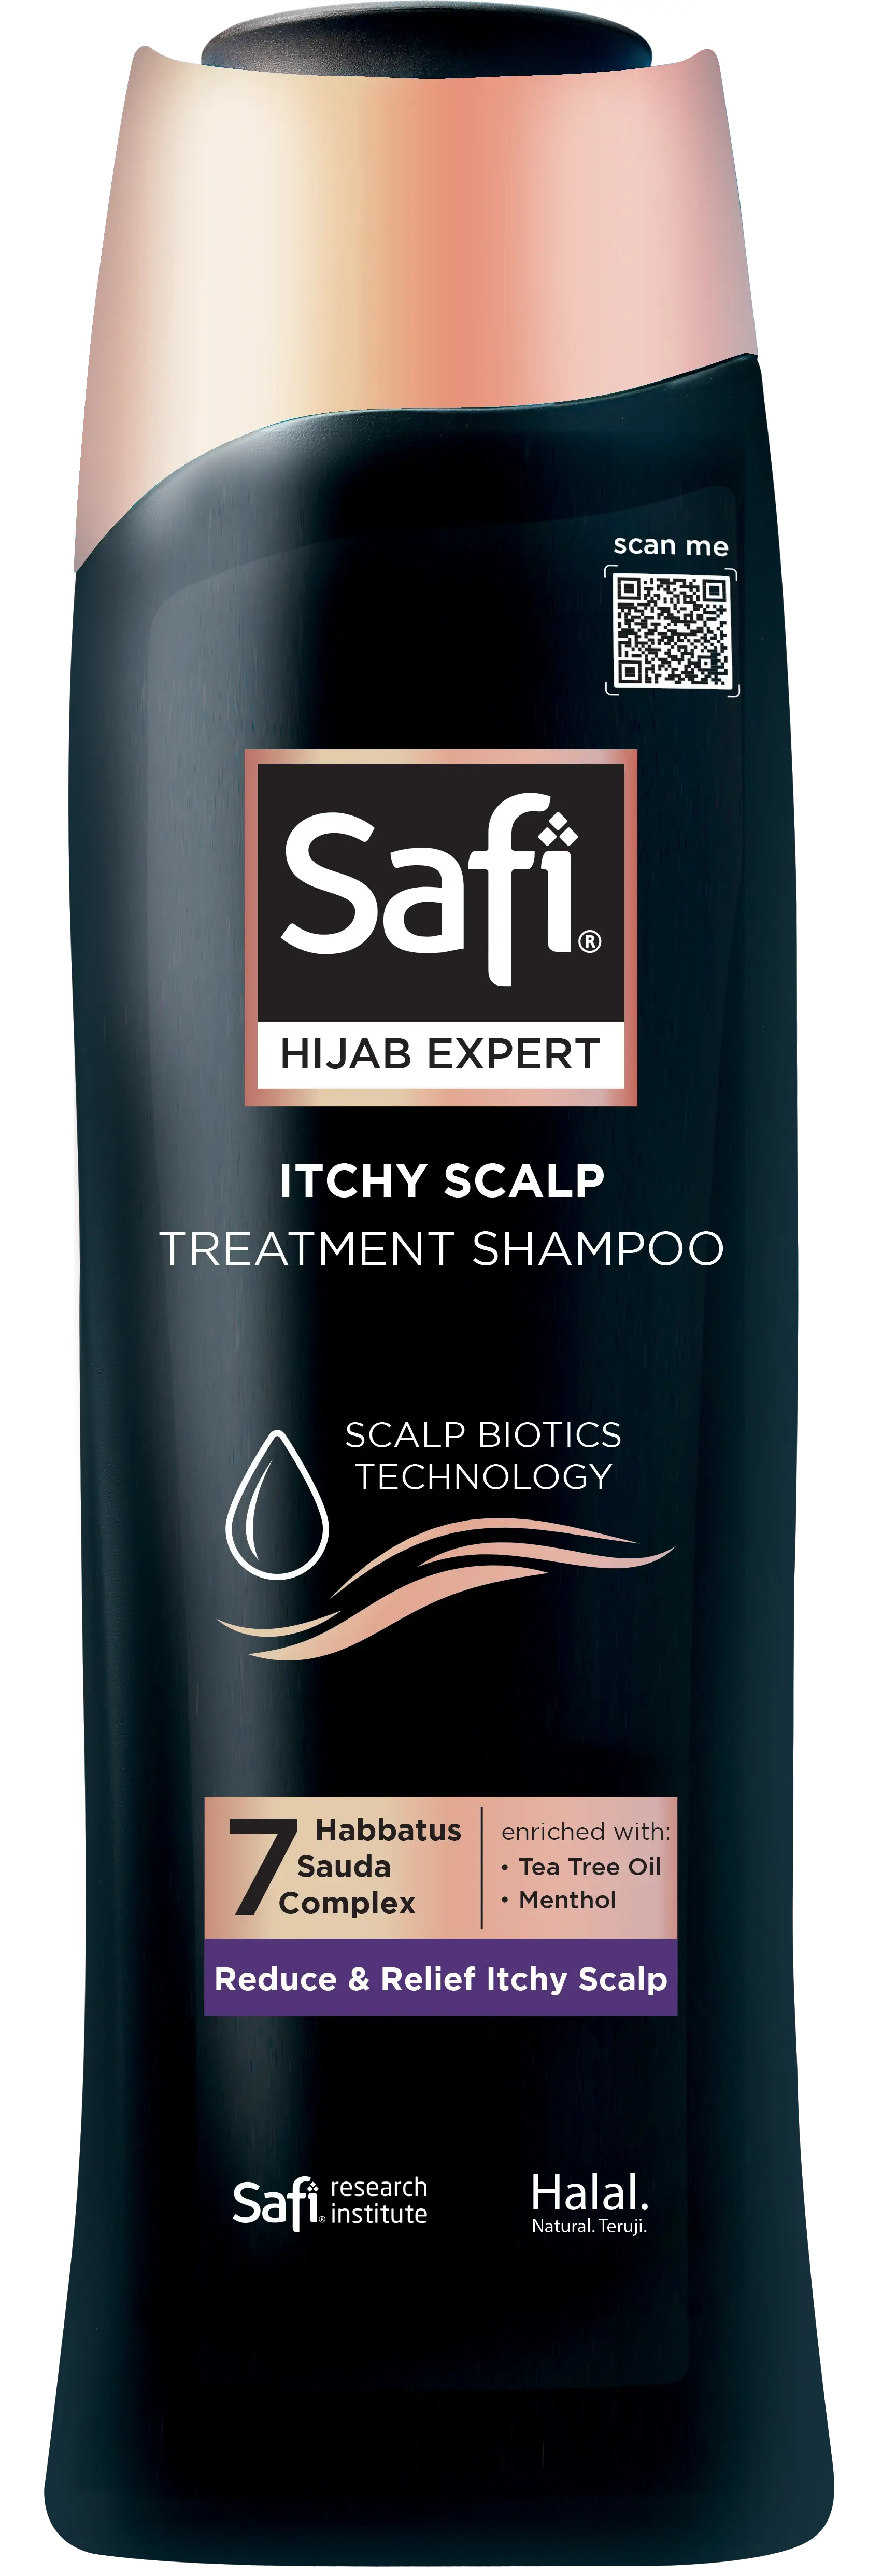 Safi Hijab Expert Itchy Scalp Treatment Shampoo - Safi Hijab Expert Itchy Scalp Treatment Shampoo